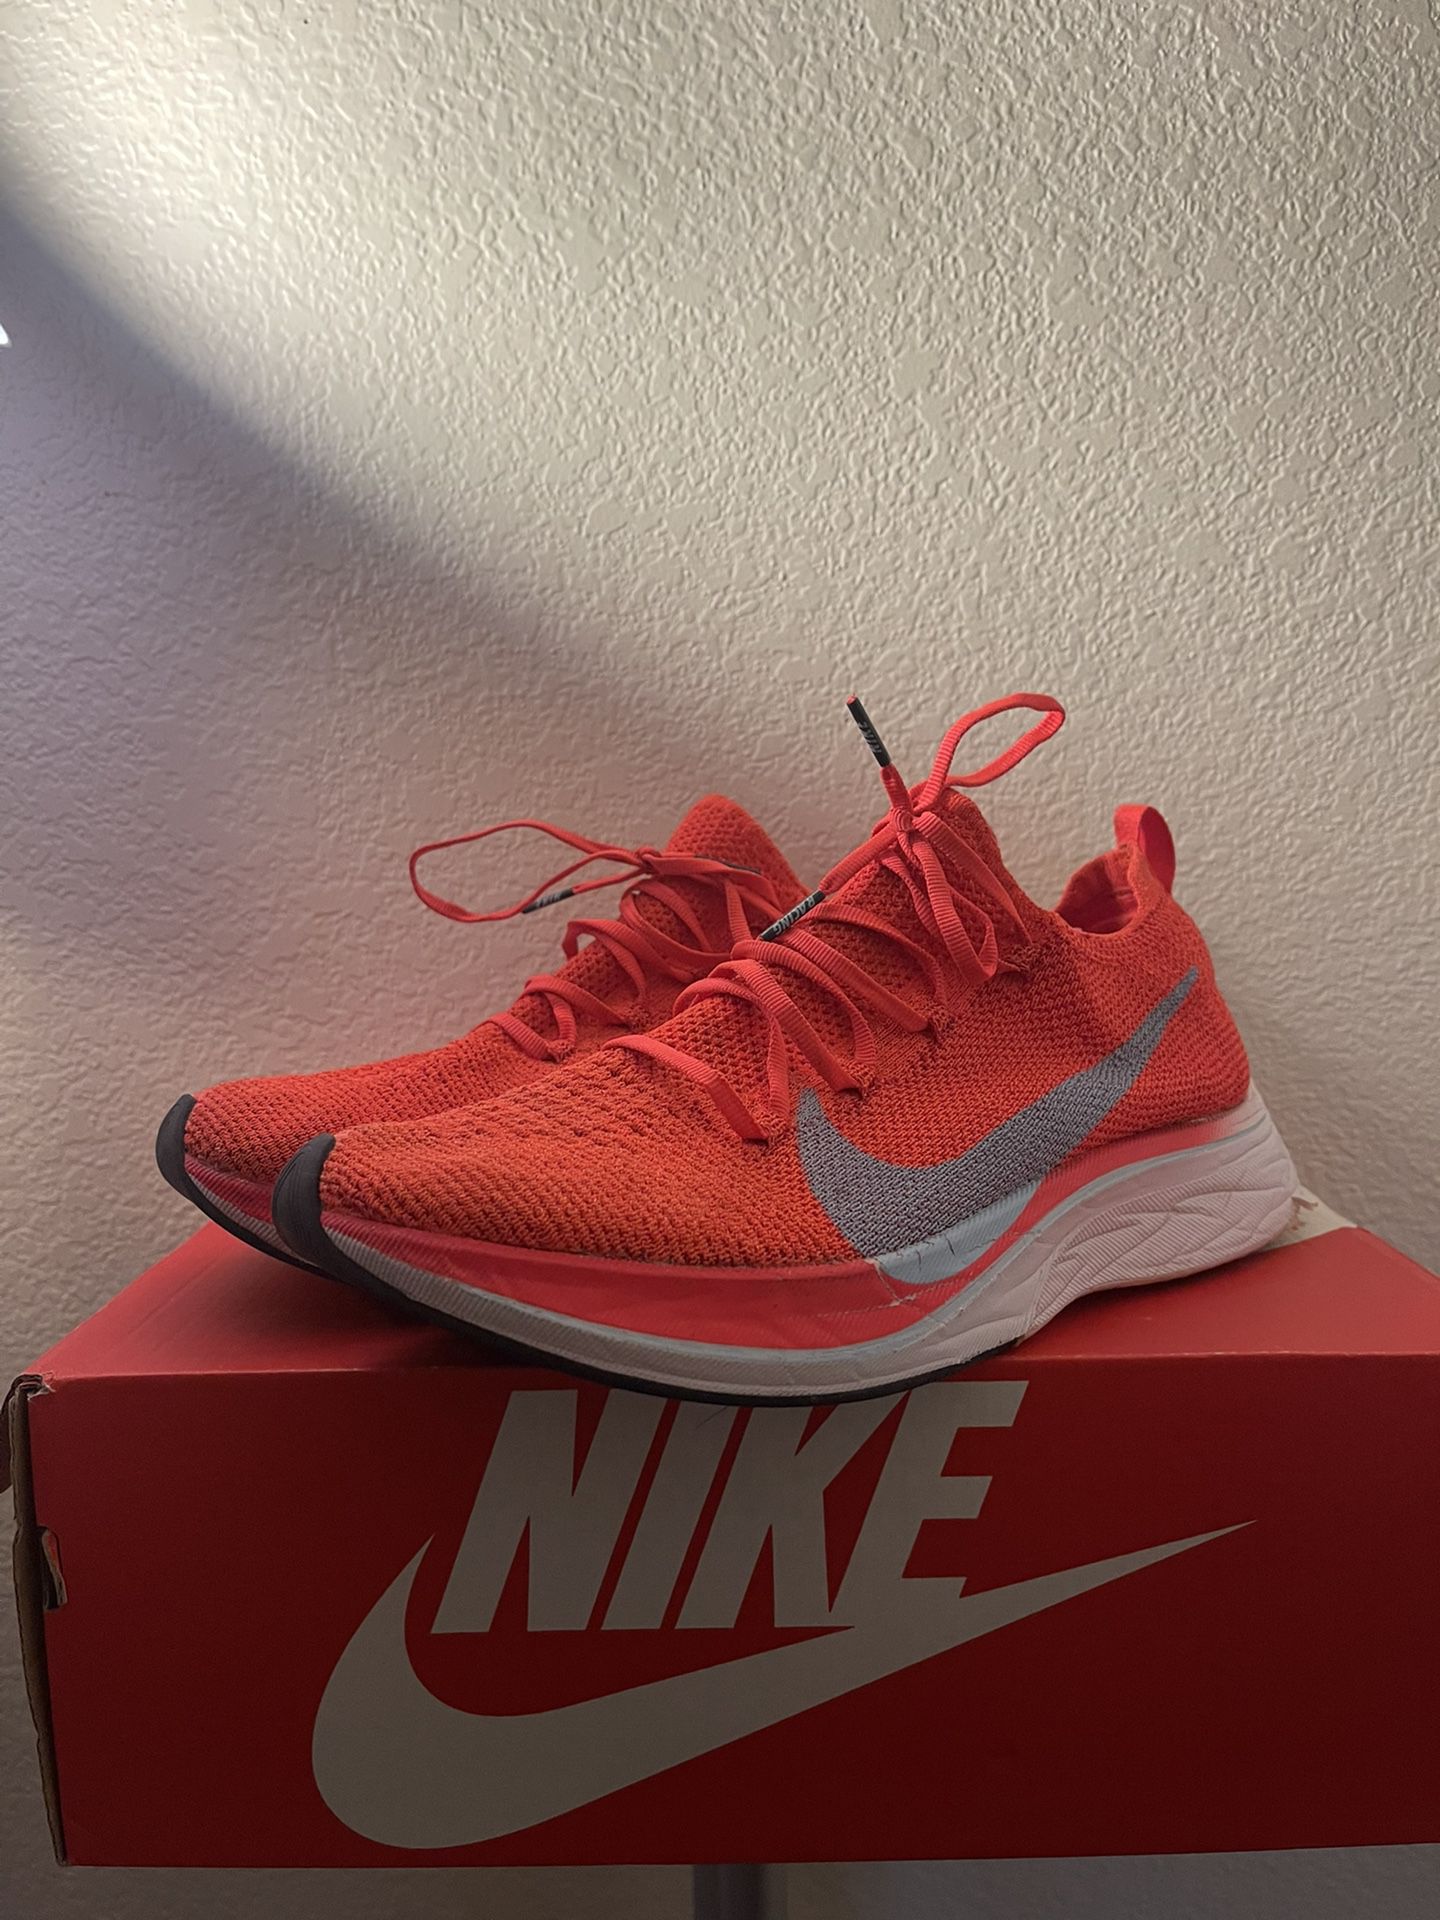 Nike Vapor Fly 4% Bright Crimson